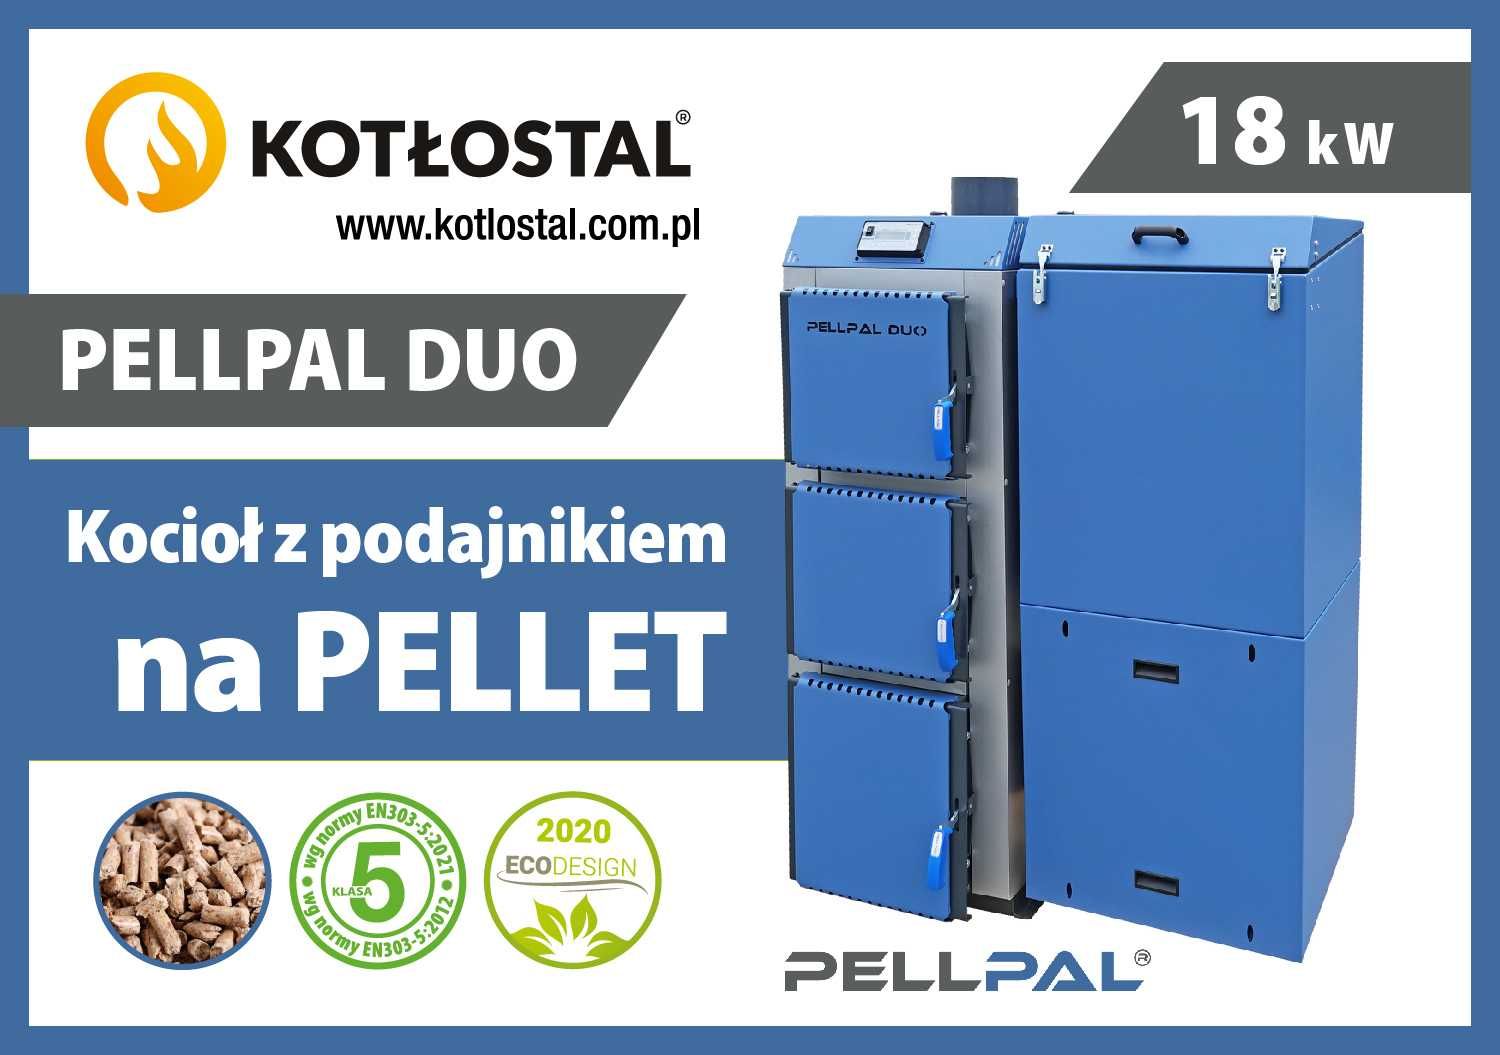 Kocioł na pellet PELLPAL DUO o mocy 18 kW - EcoDesign - sterownik LCD